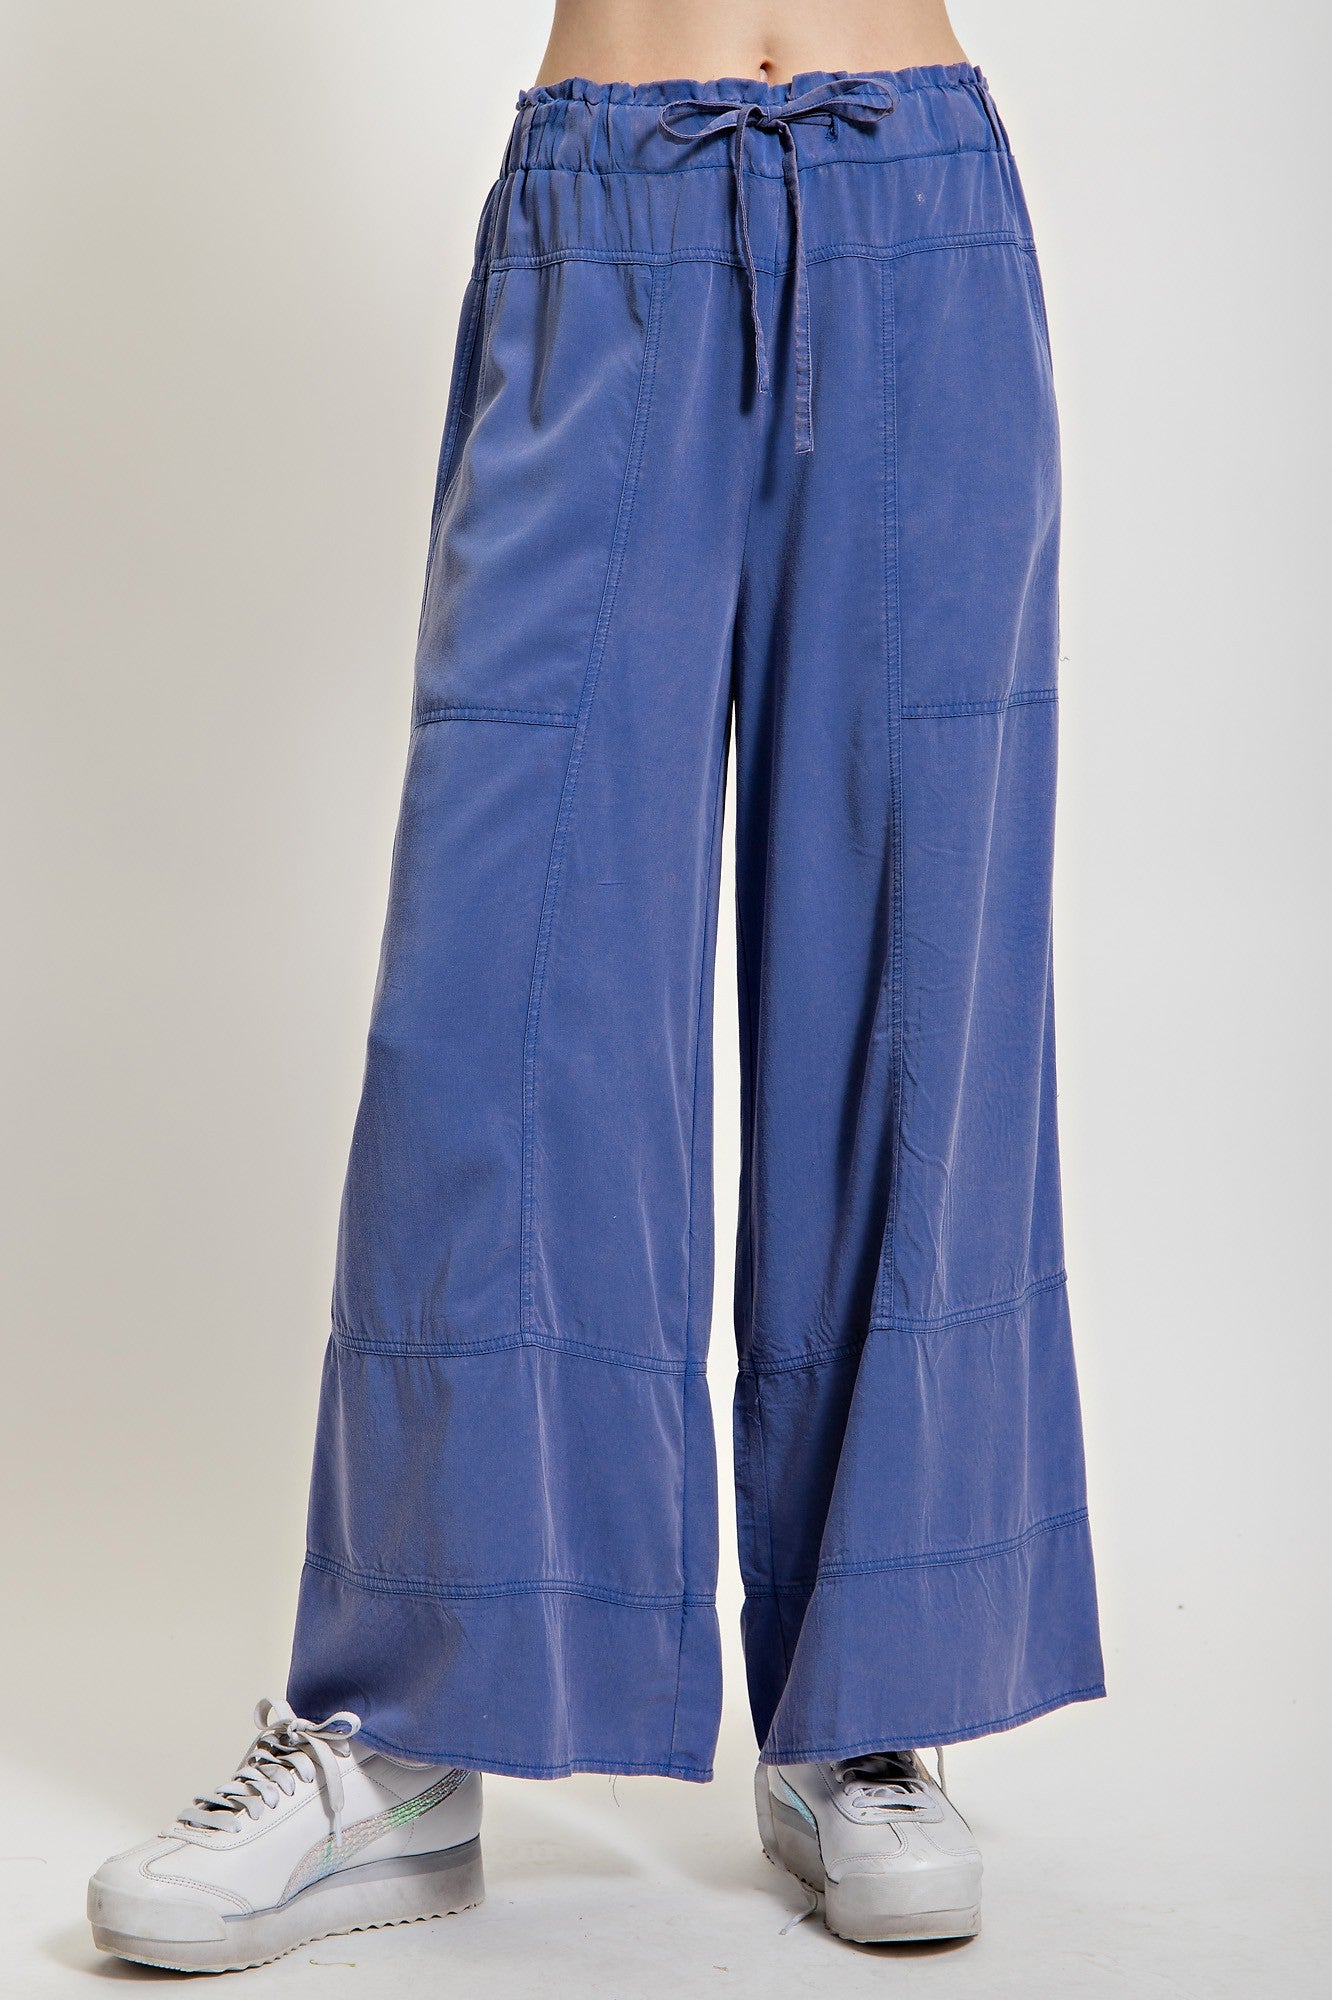 Peri blue pants